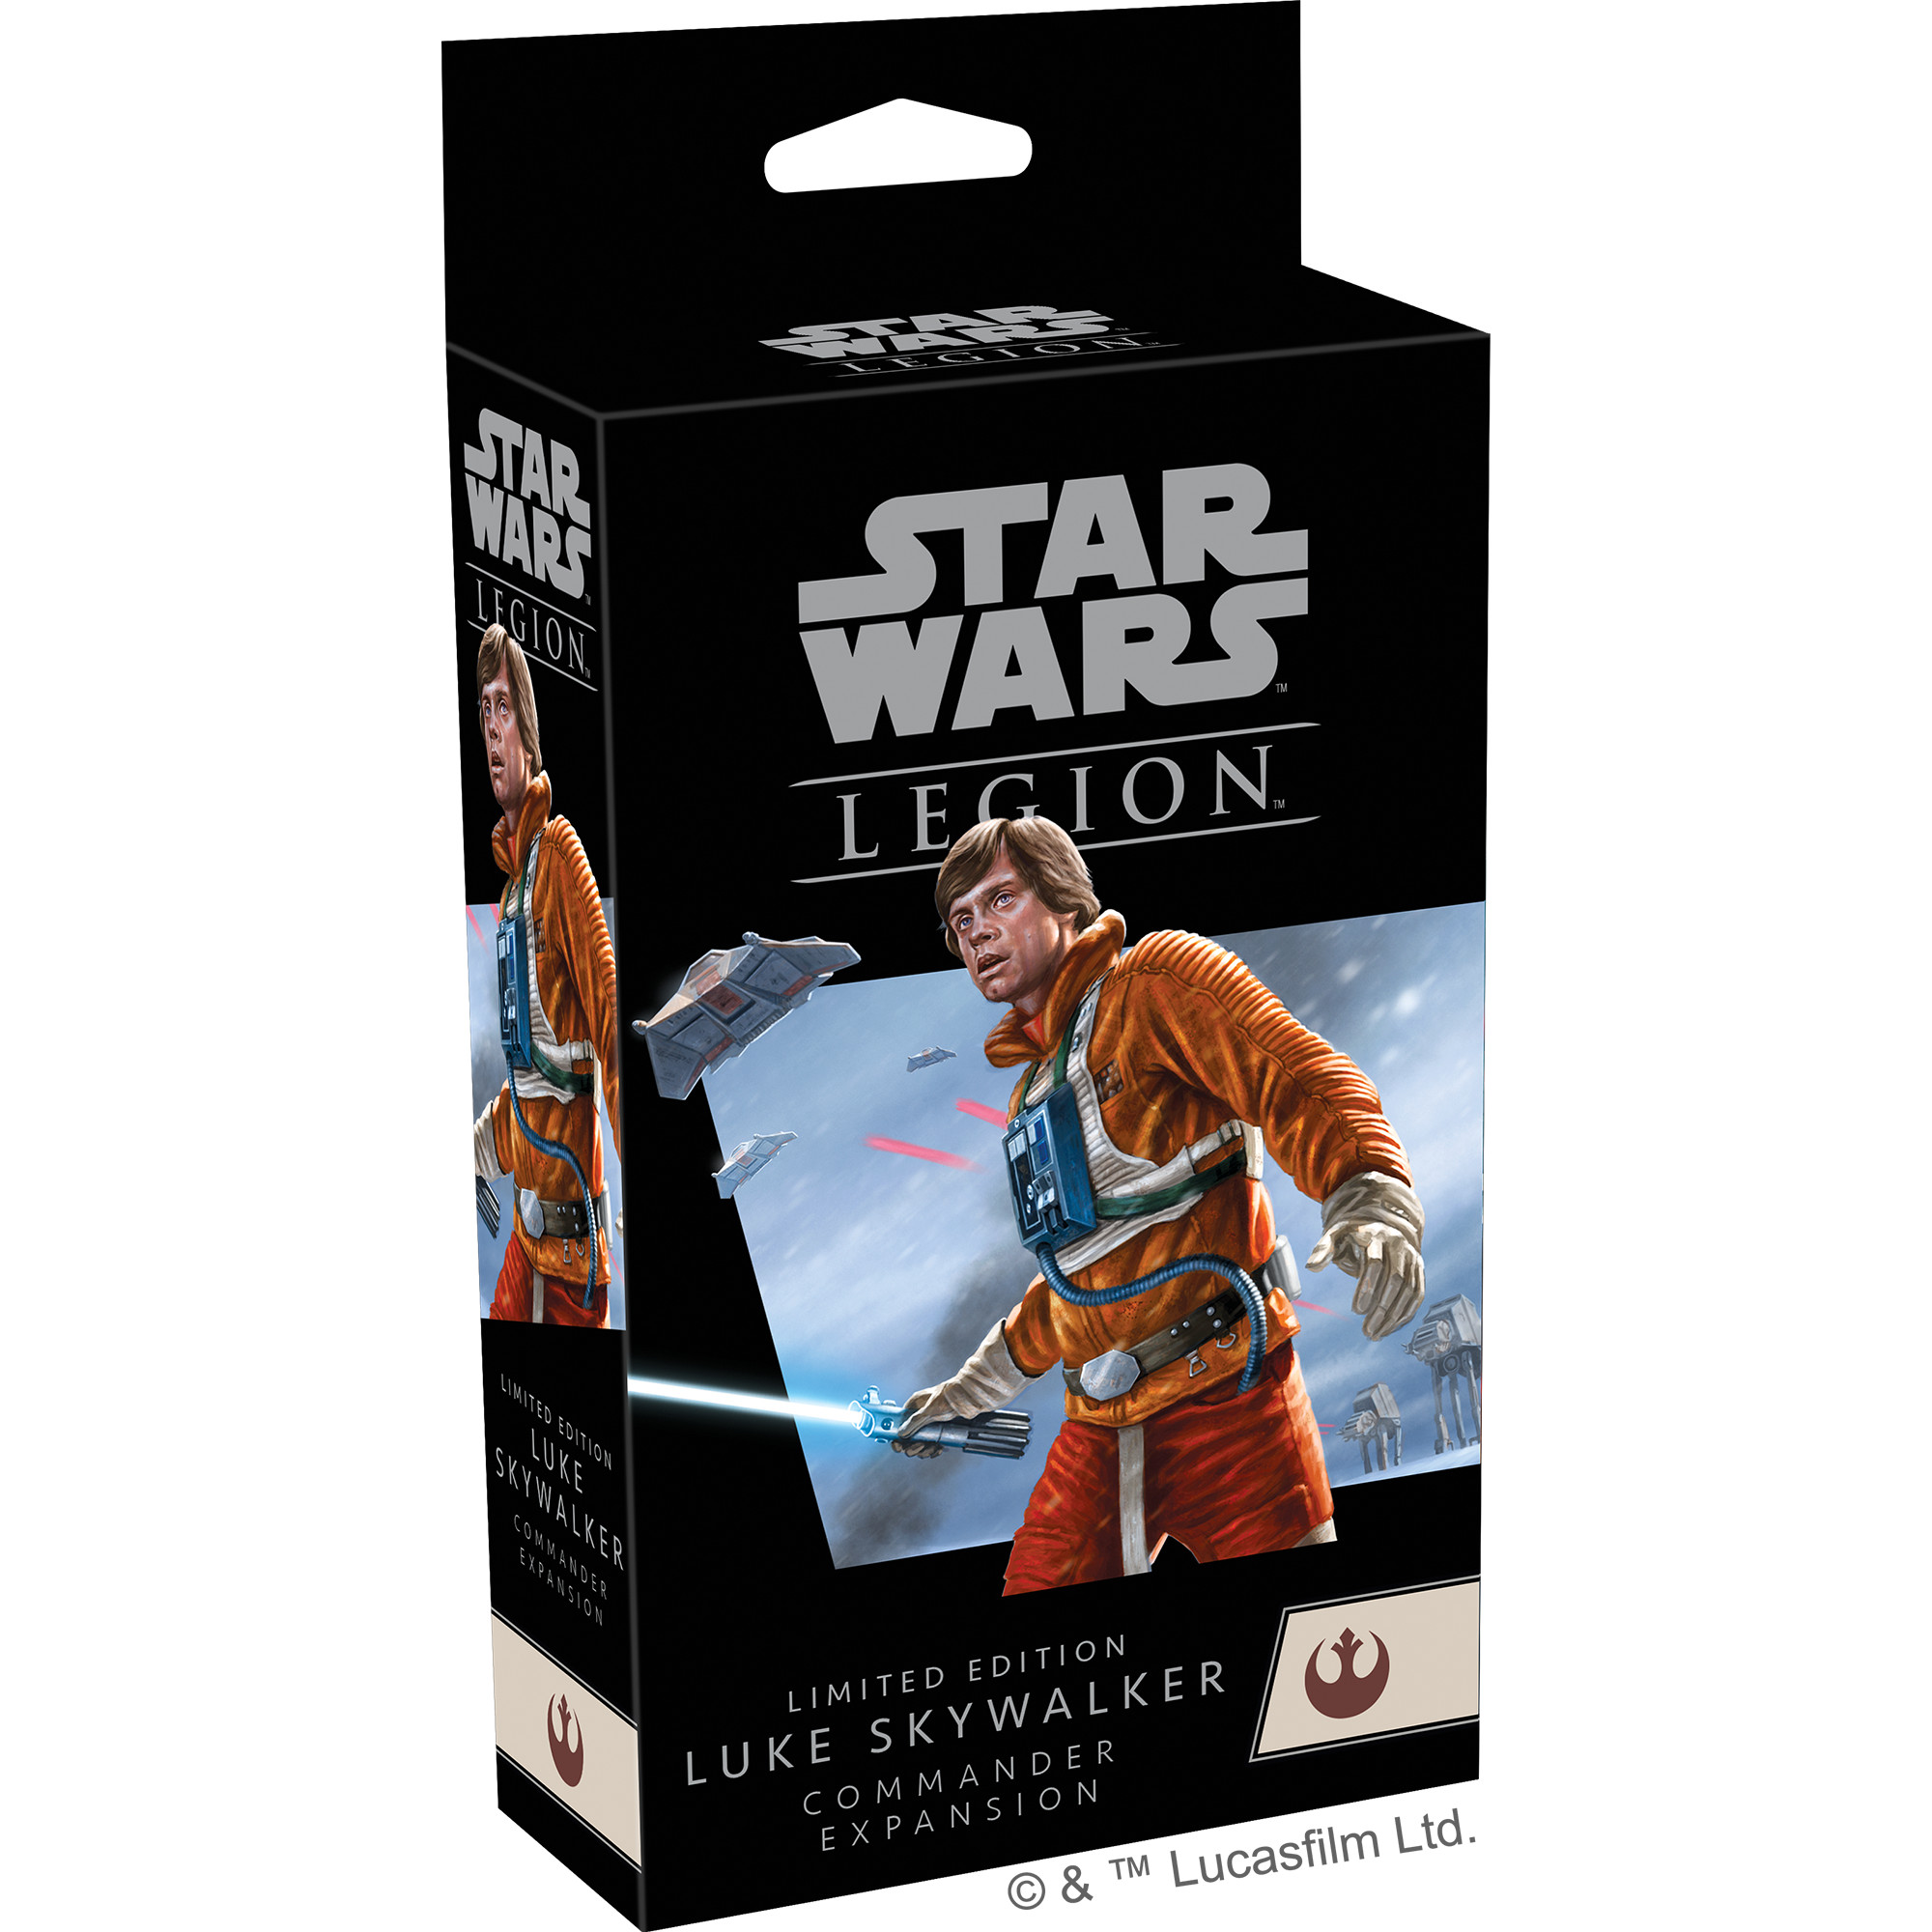 Packaging art for the Special Edition Luke Skywalker Commander